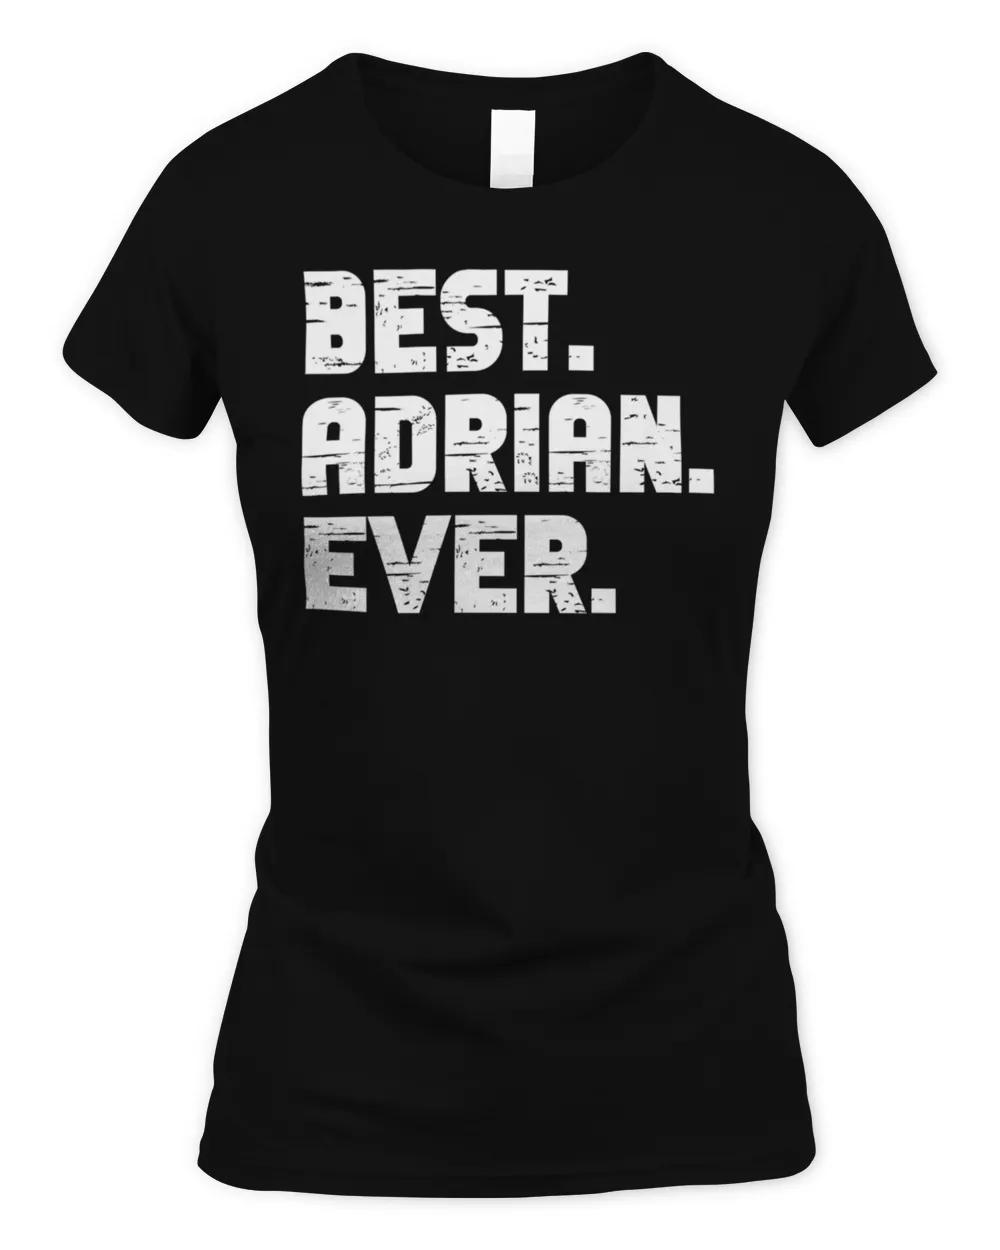 Best Adrian Ever Popular Birth Names Adrian Costume T-Shirt